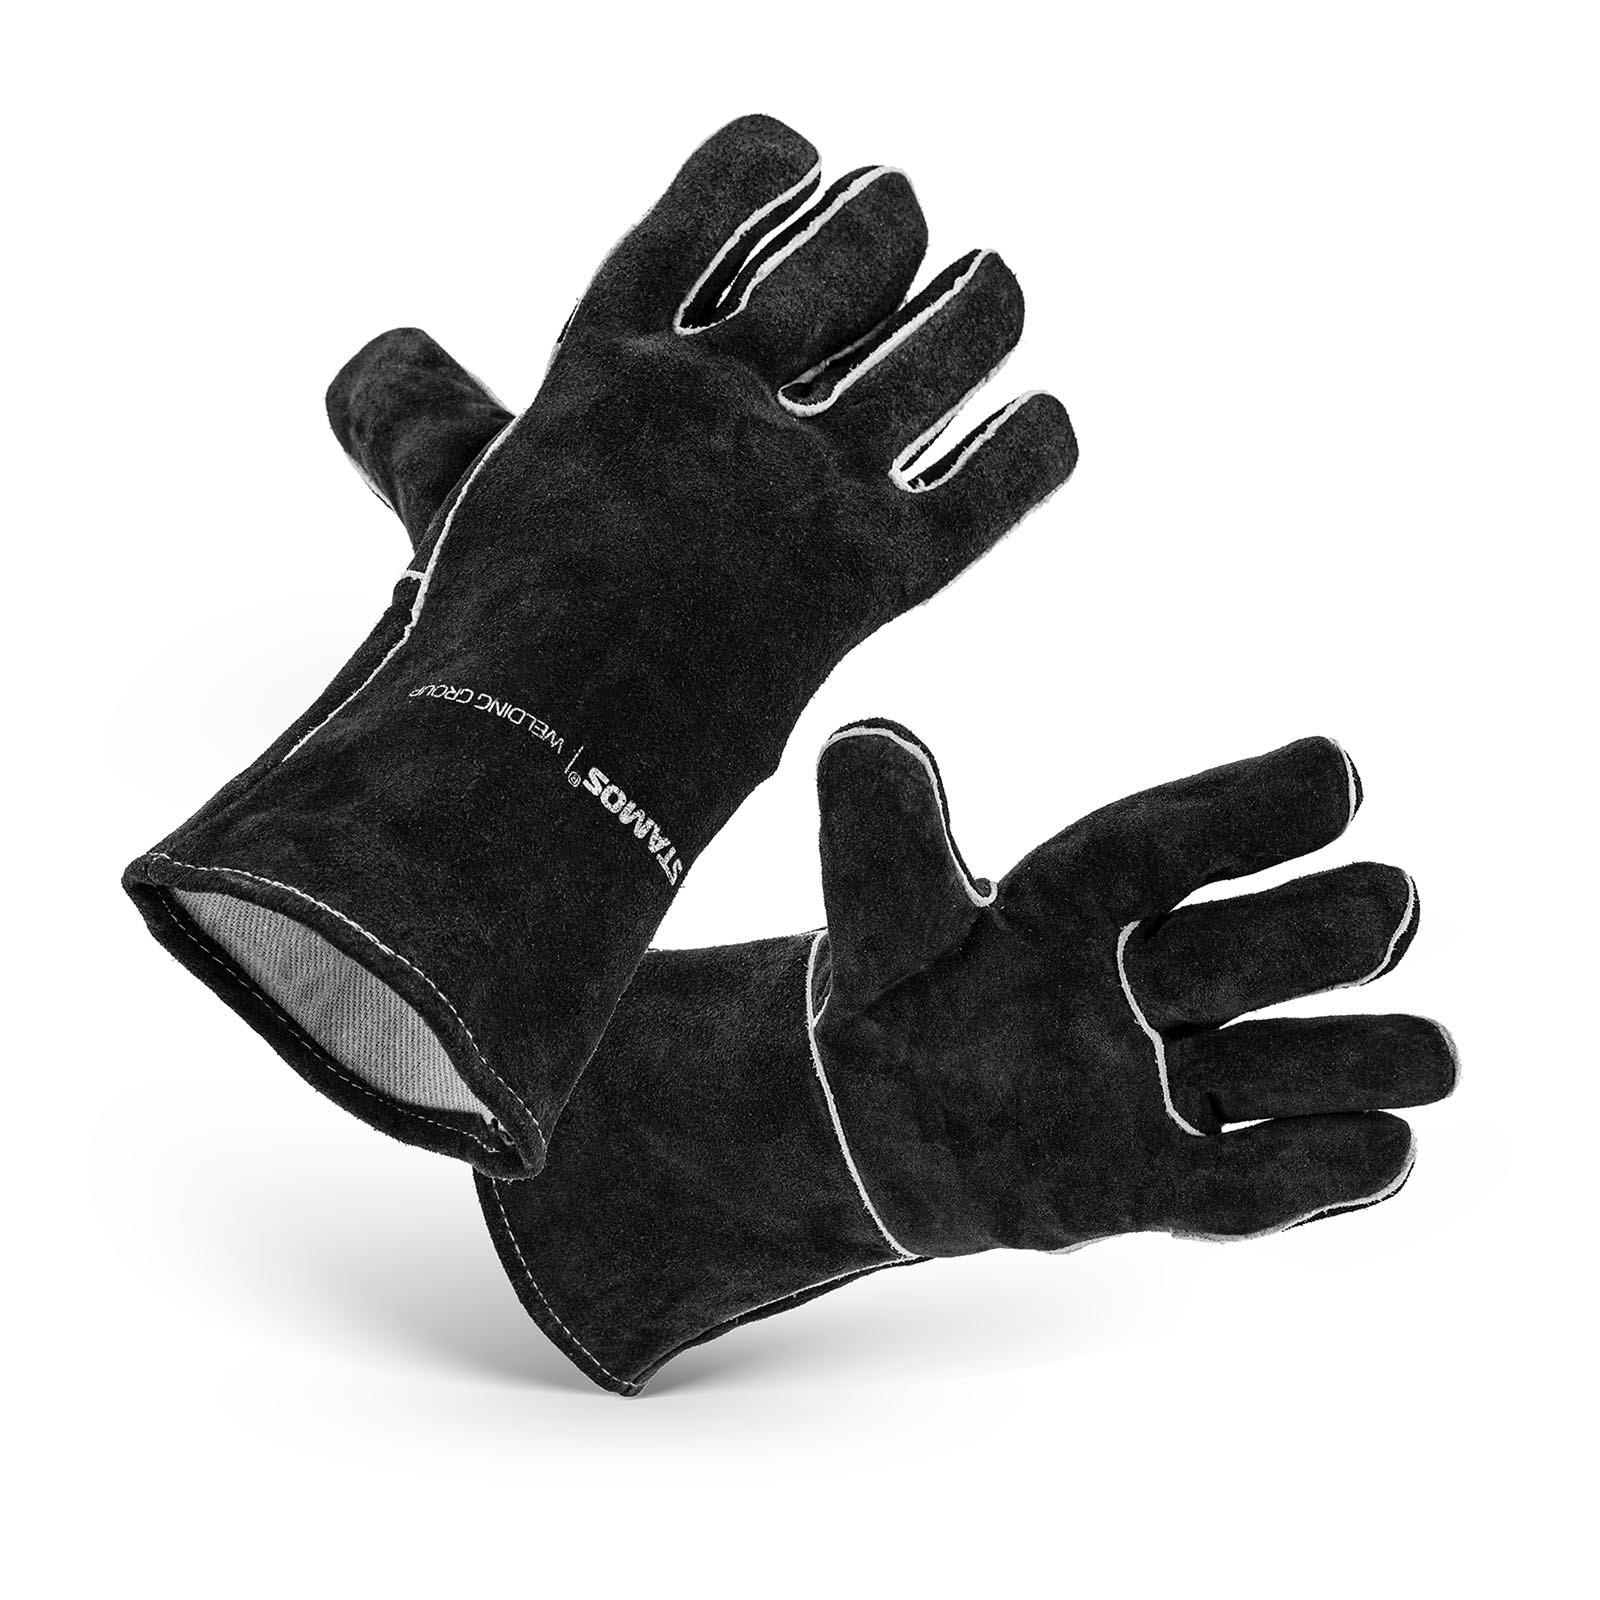 Welding Gloves - size L - 34 x 19 cm